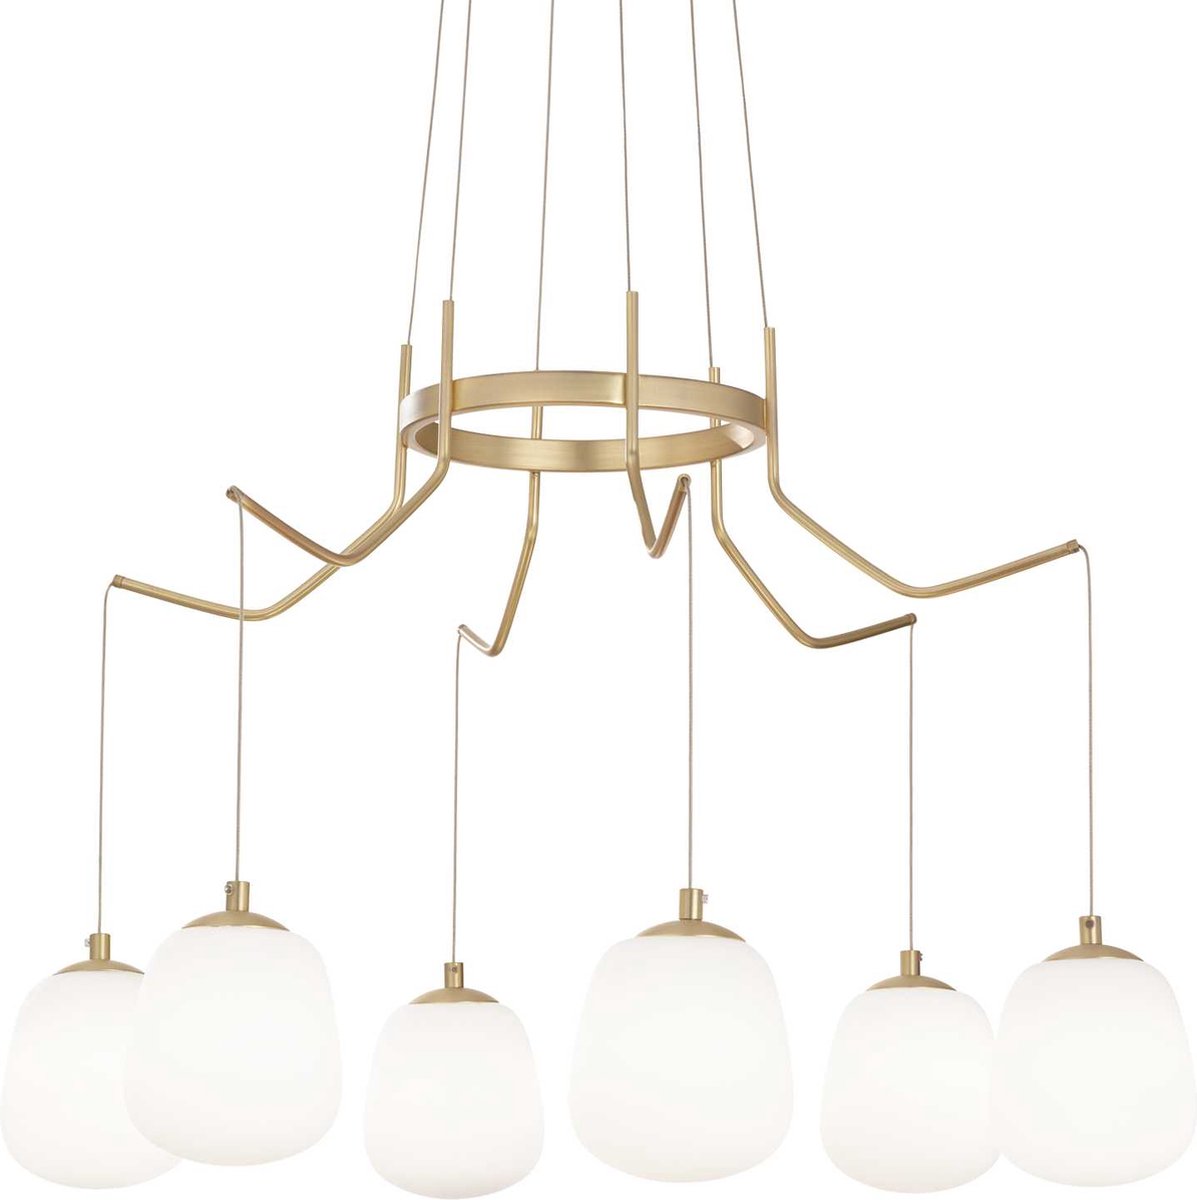 Ideal Your Lux - Hanglamp Modern - Metaal - G9 - Voor Binnen - Lamp - Lampen - Woonkamer - Eetkamer - Slaapkamer - Messing